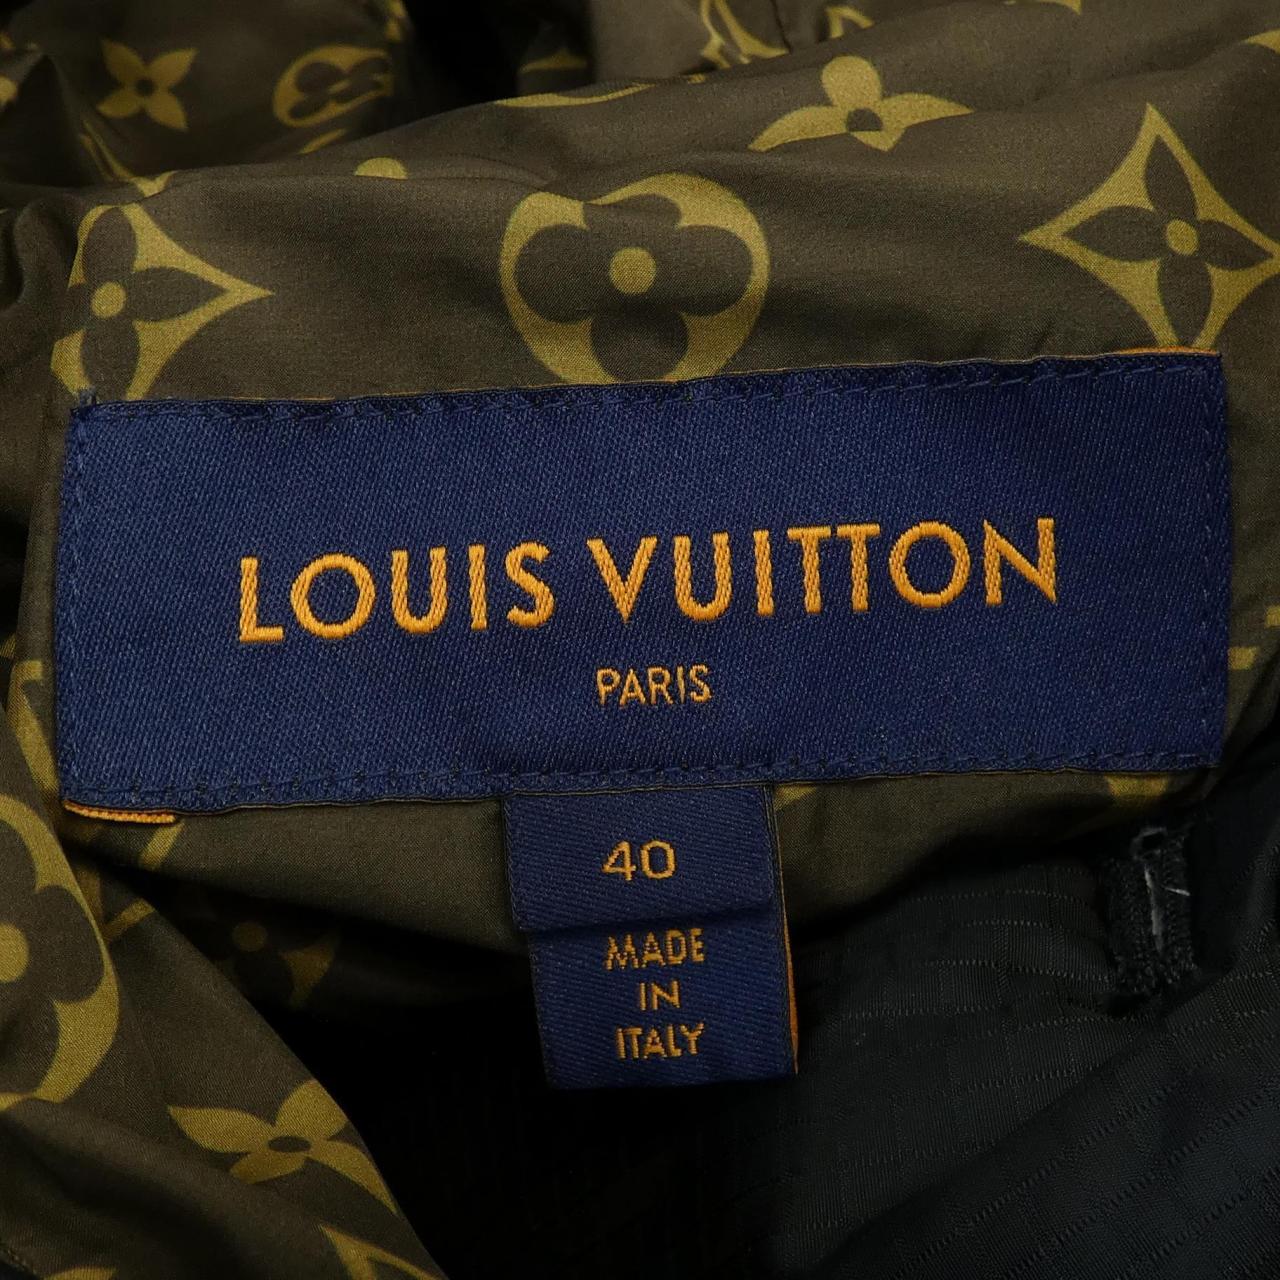 LOUIS VUITTON VUITTON down jacket